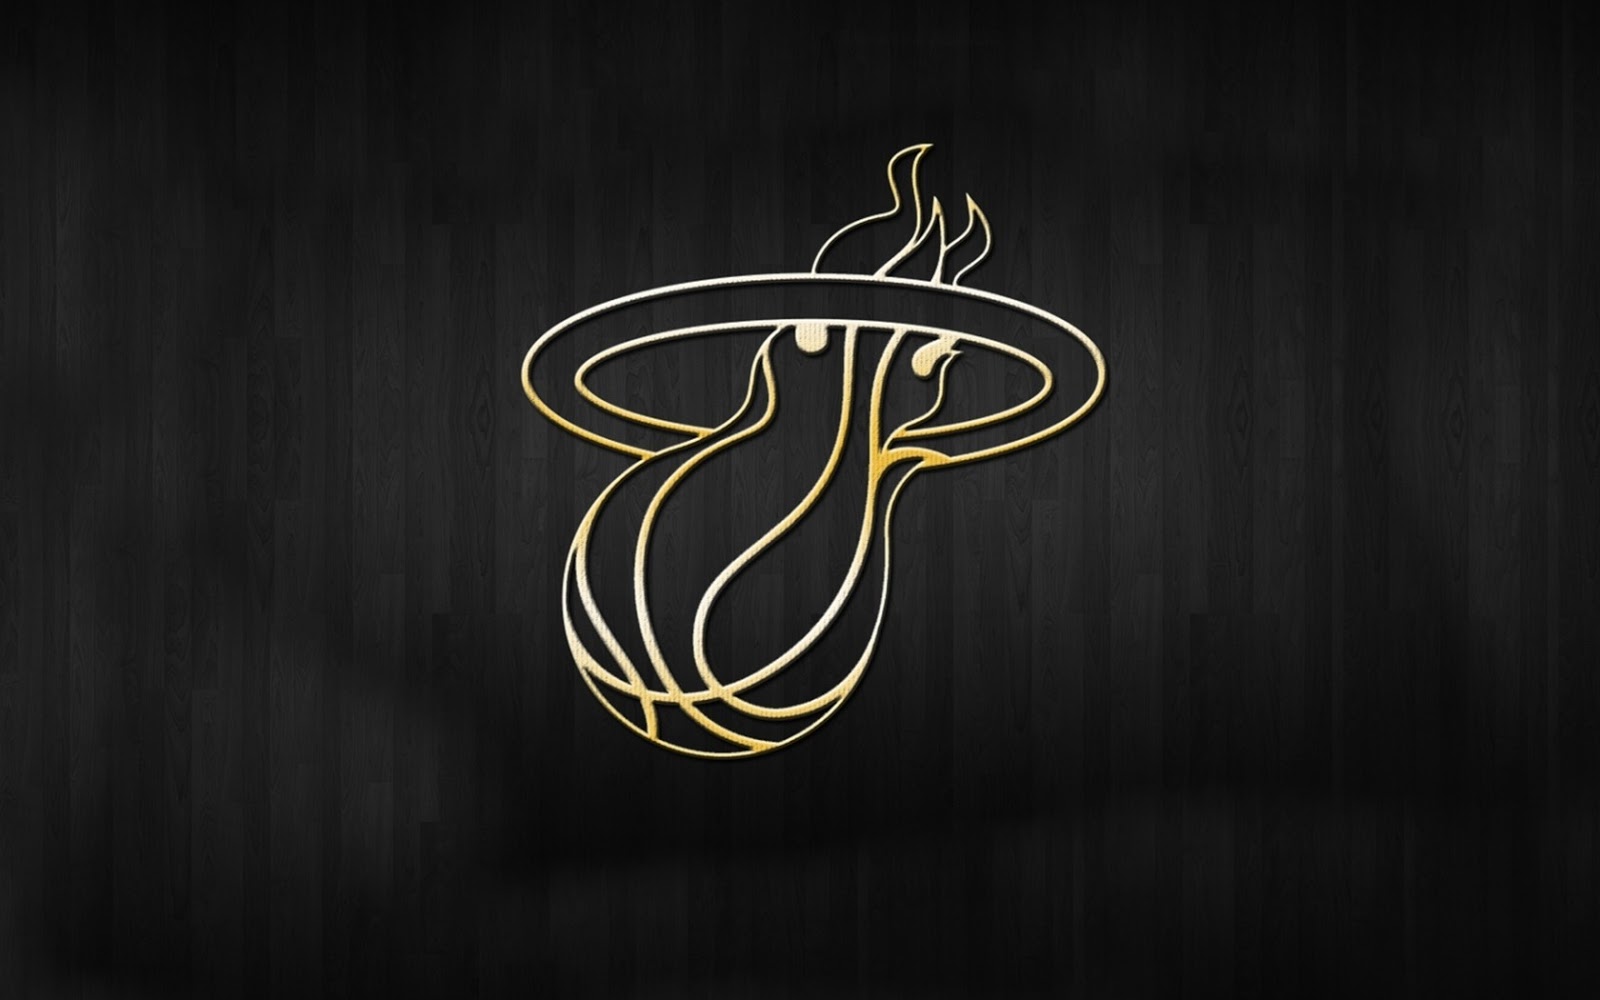 Miami Heat Basketball Club Logos HD Wallpapers 2013   Its